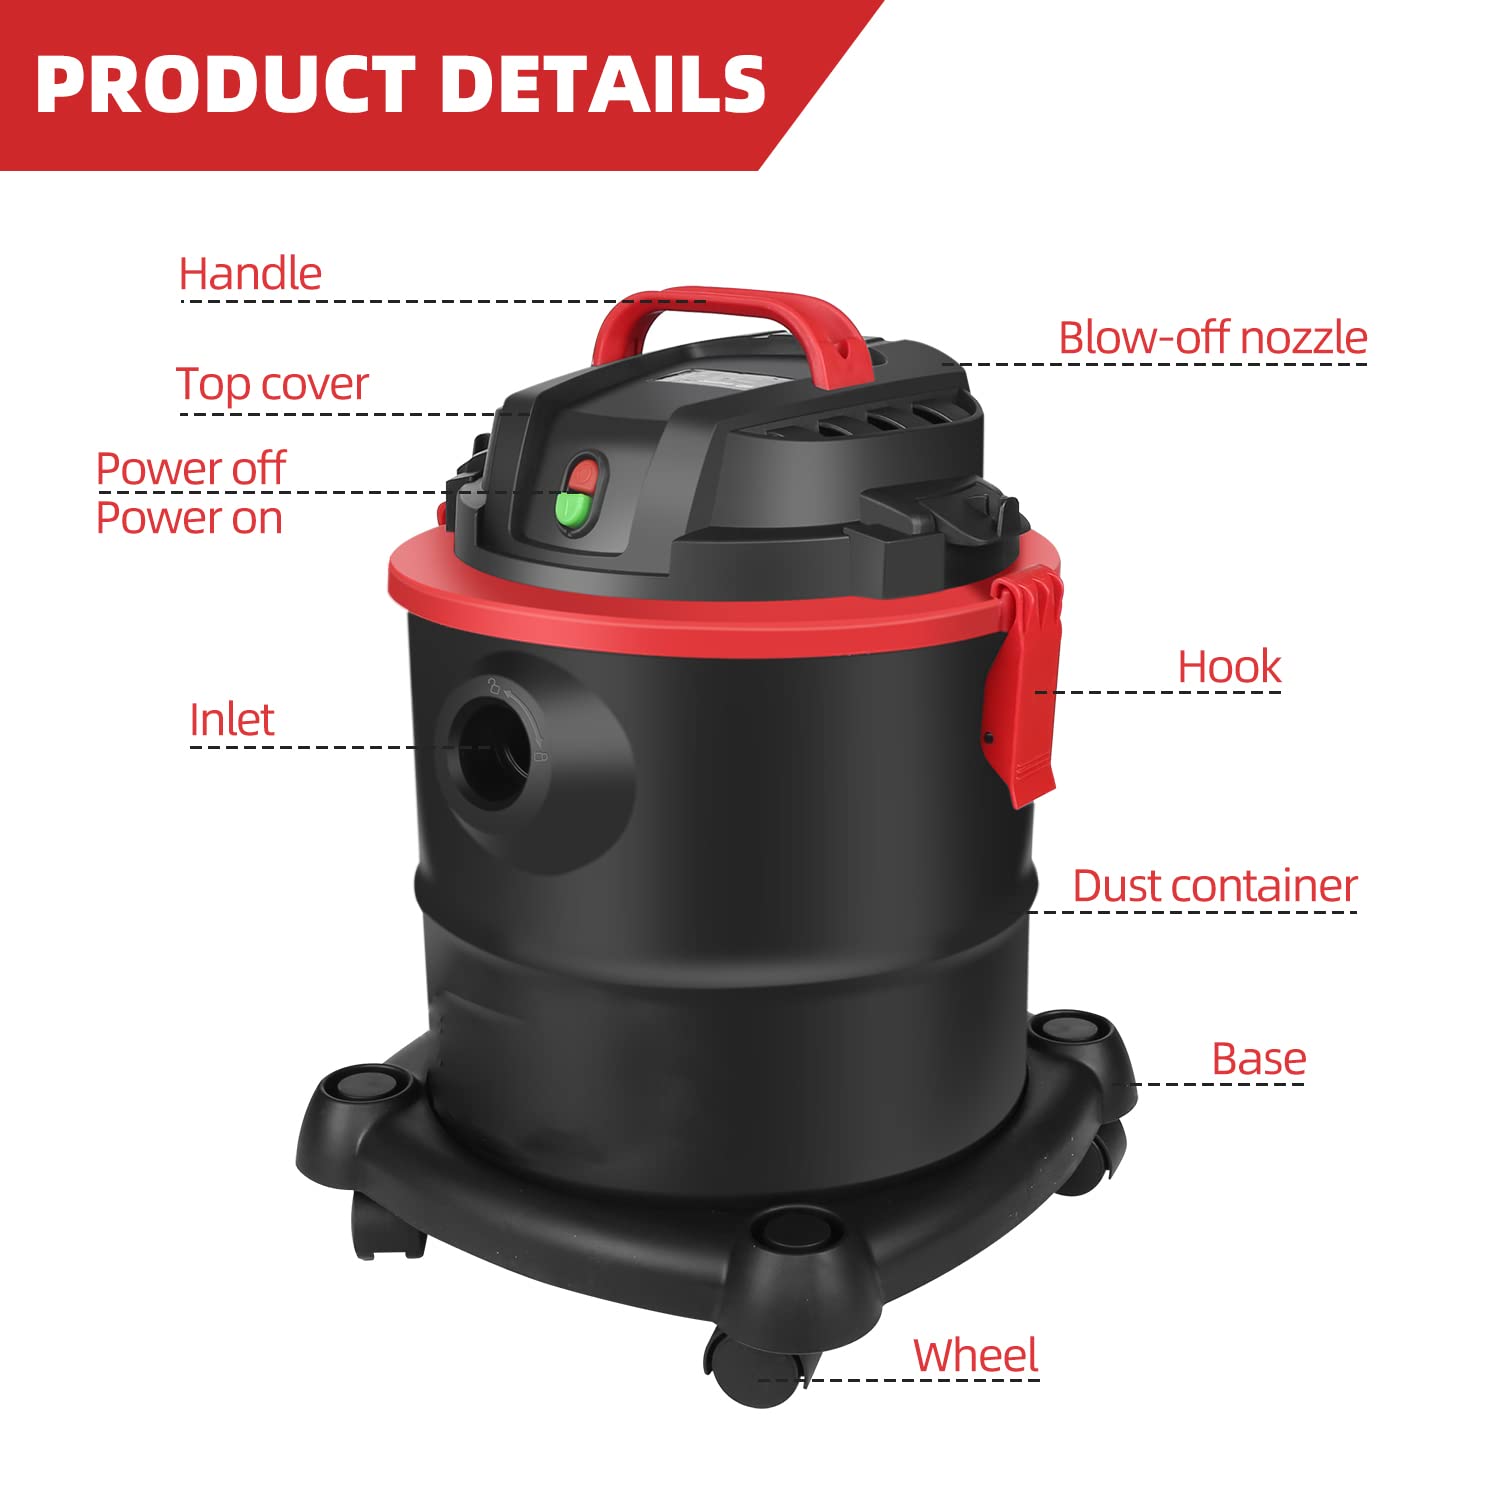 Prostormer 3 in 1 Wet Dry Vacuum Cleaner, 5 Gallon 5.5 Peak HP Portable Wet Dry Vac Floor Cleaner with Blower Function for Garage, Car, Home & Workshop